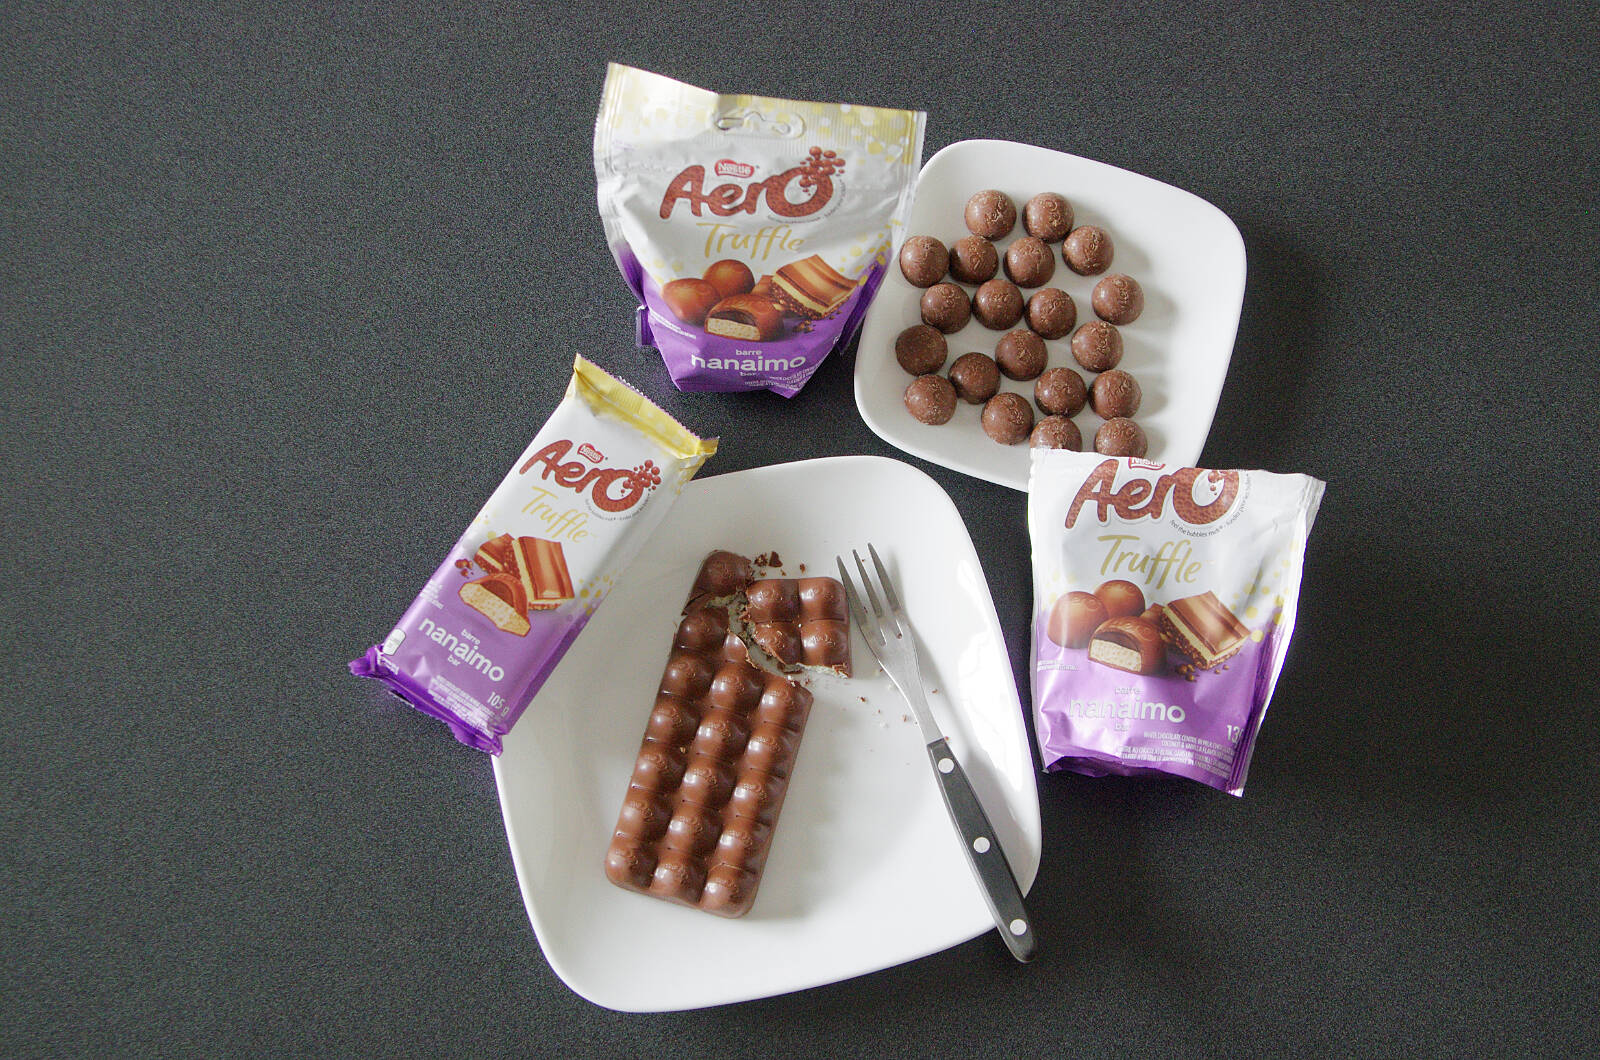 Nestlé Aero Nanaimo chocolate bars and chocolate truffles are now available on store shelves. (Chris Bush/News Bulletin)